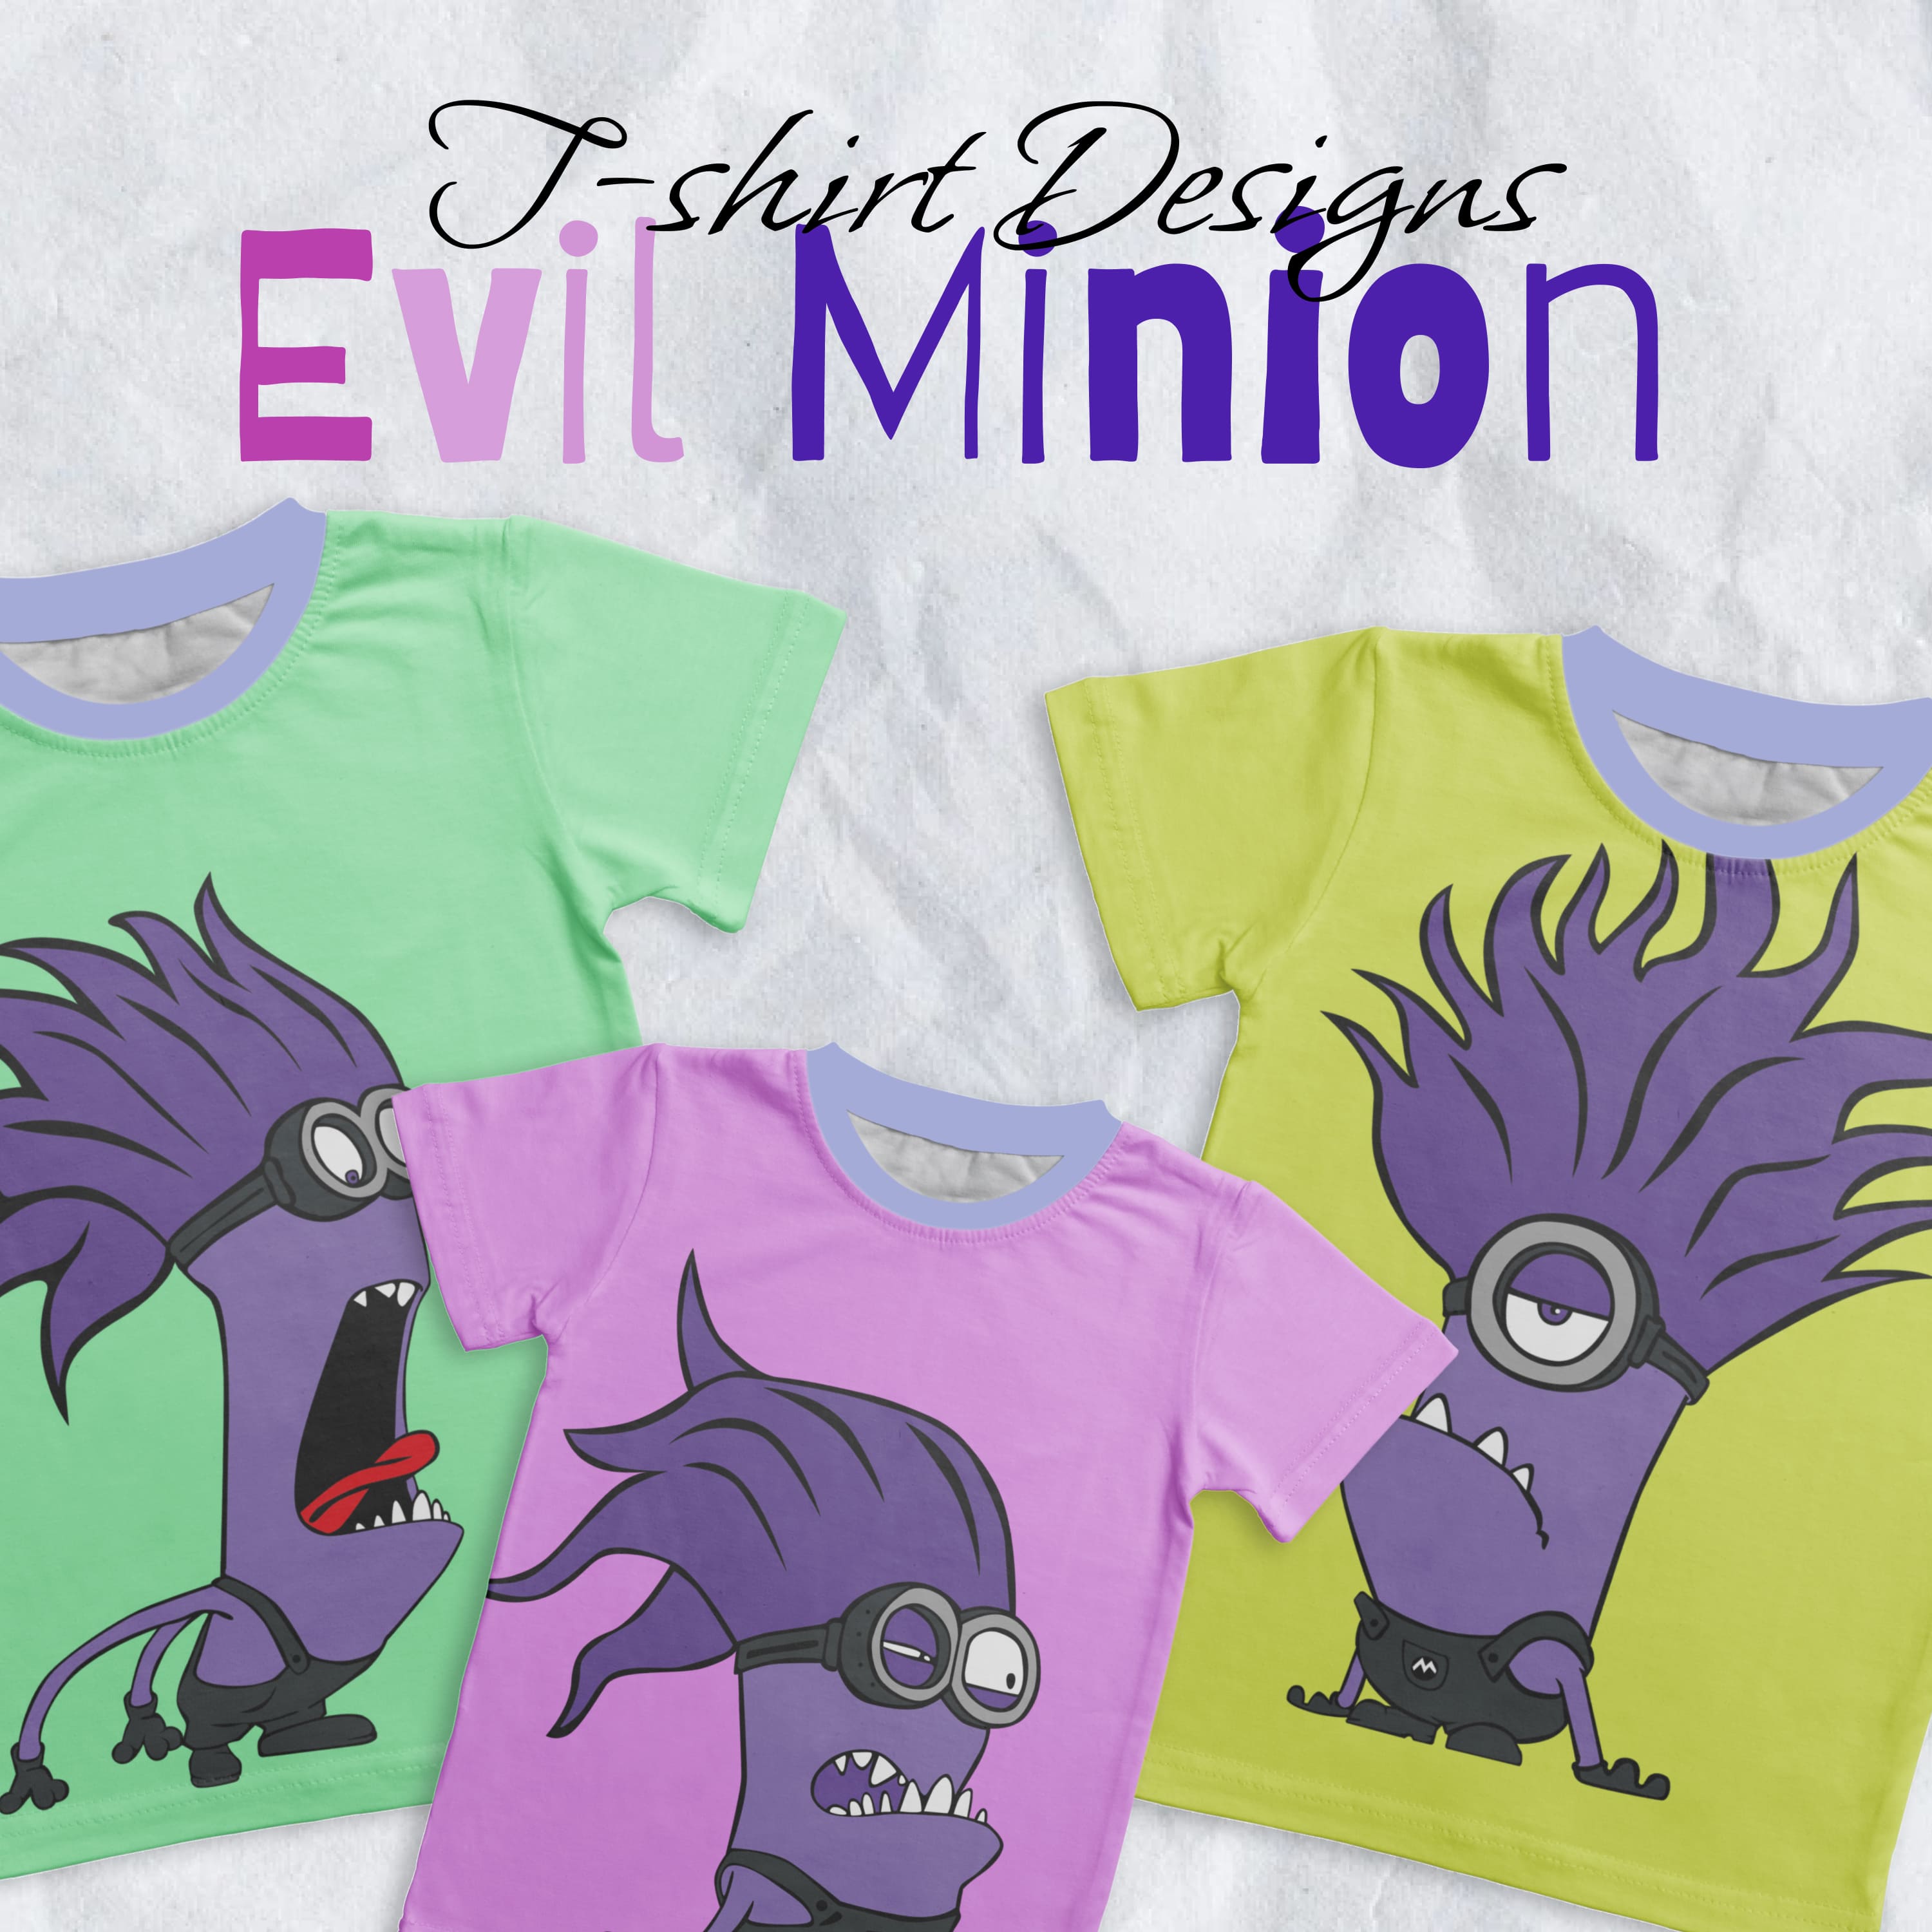 Evil Minion T-shirt Designs.